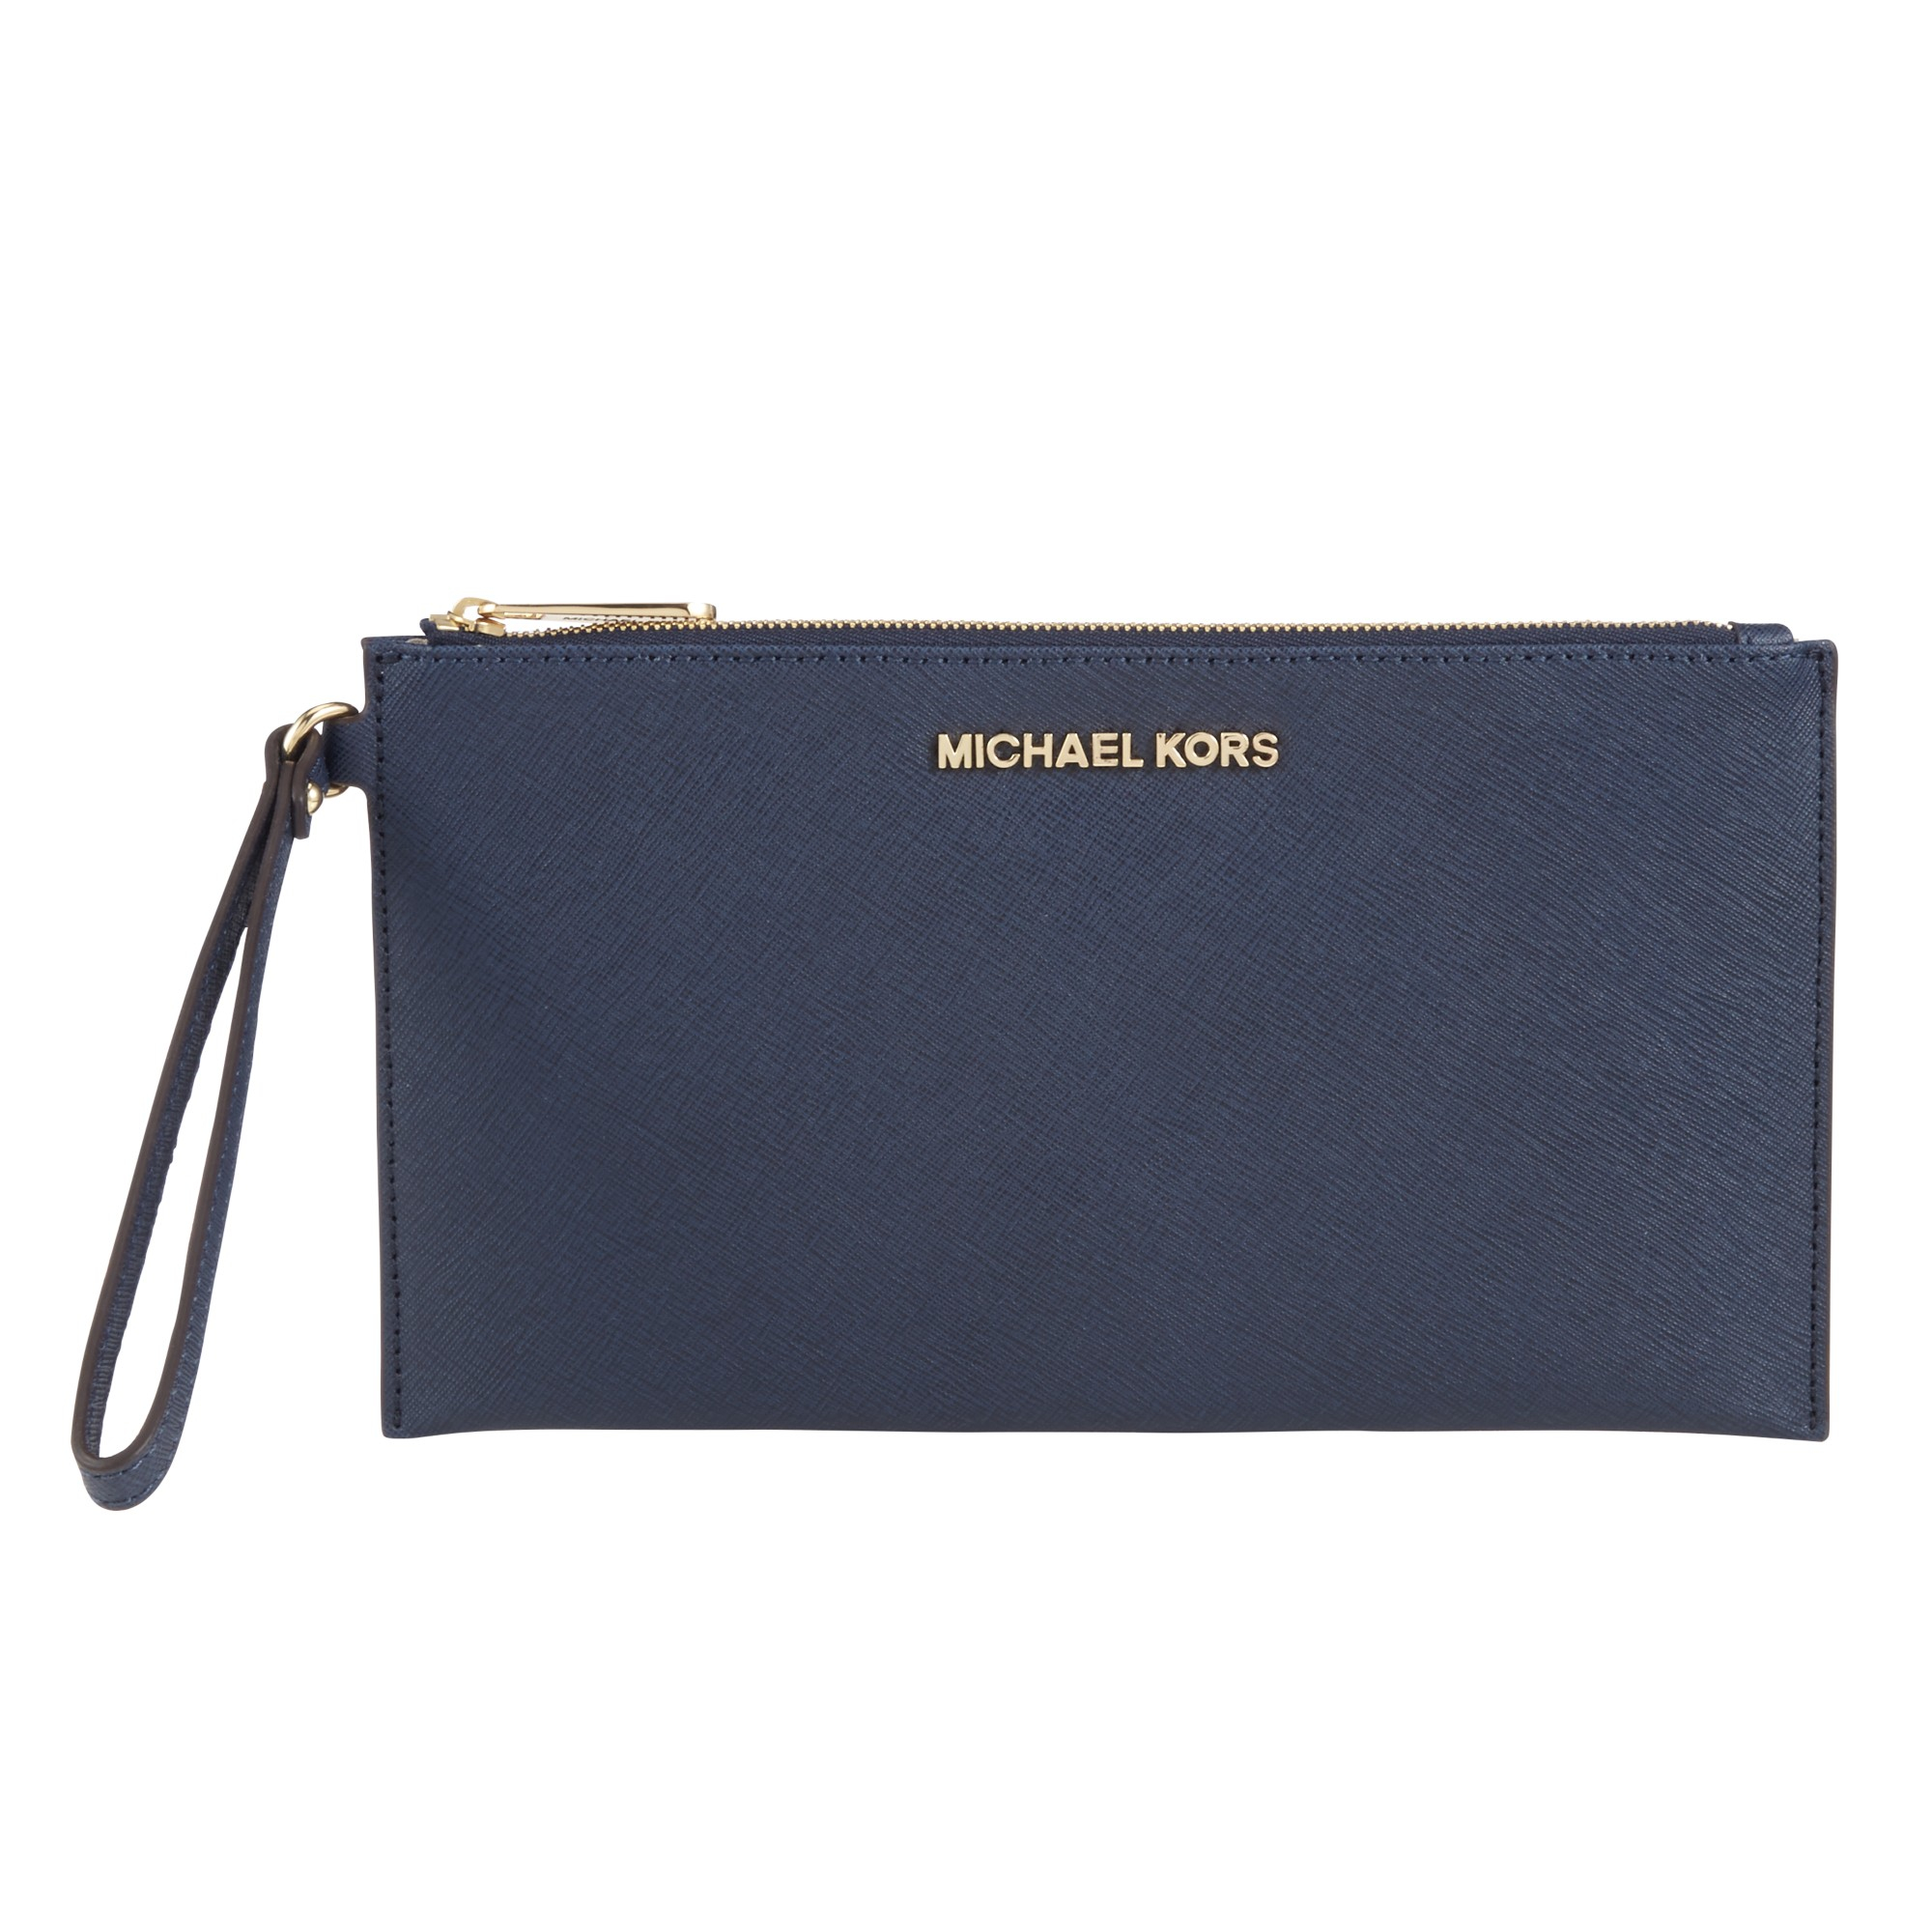 Michael Michael Kors Jet Set Travel Leather Zip Clutch Bag in Blue - Lyst